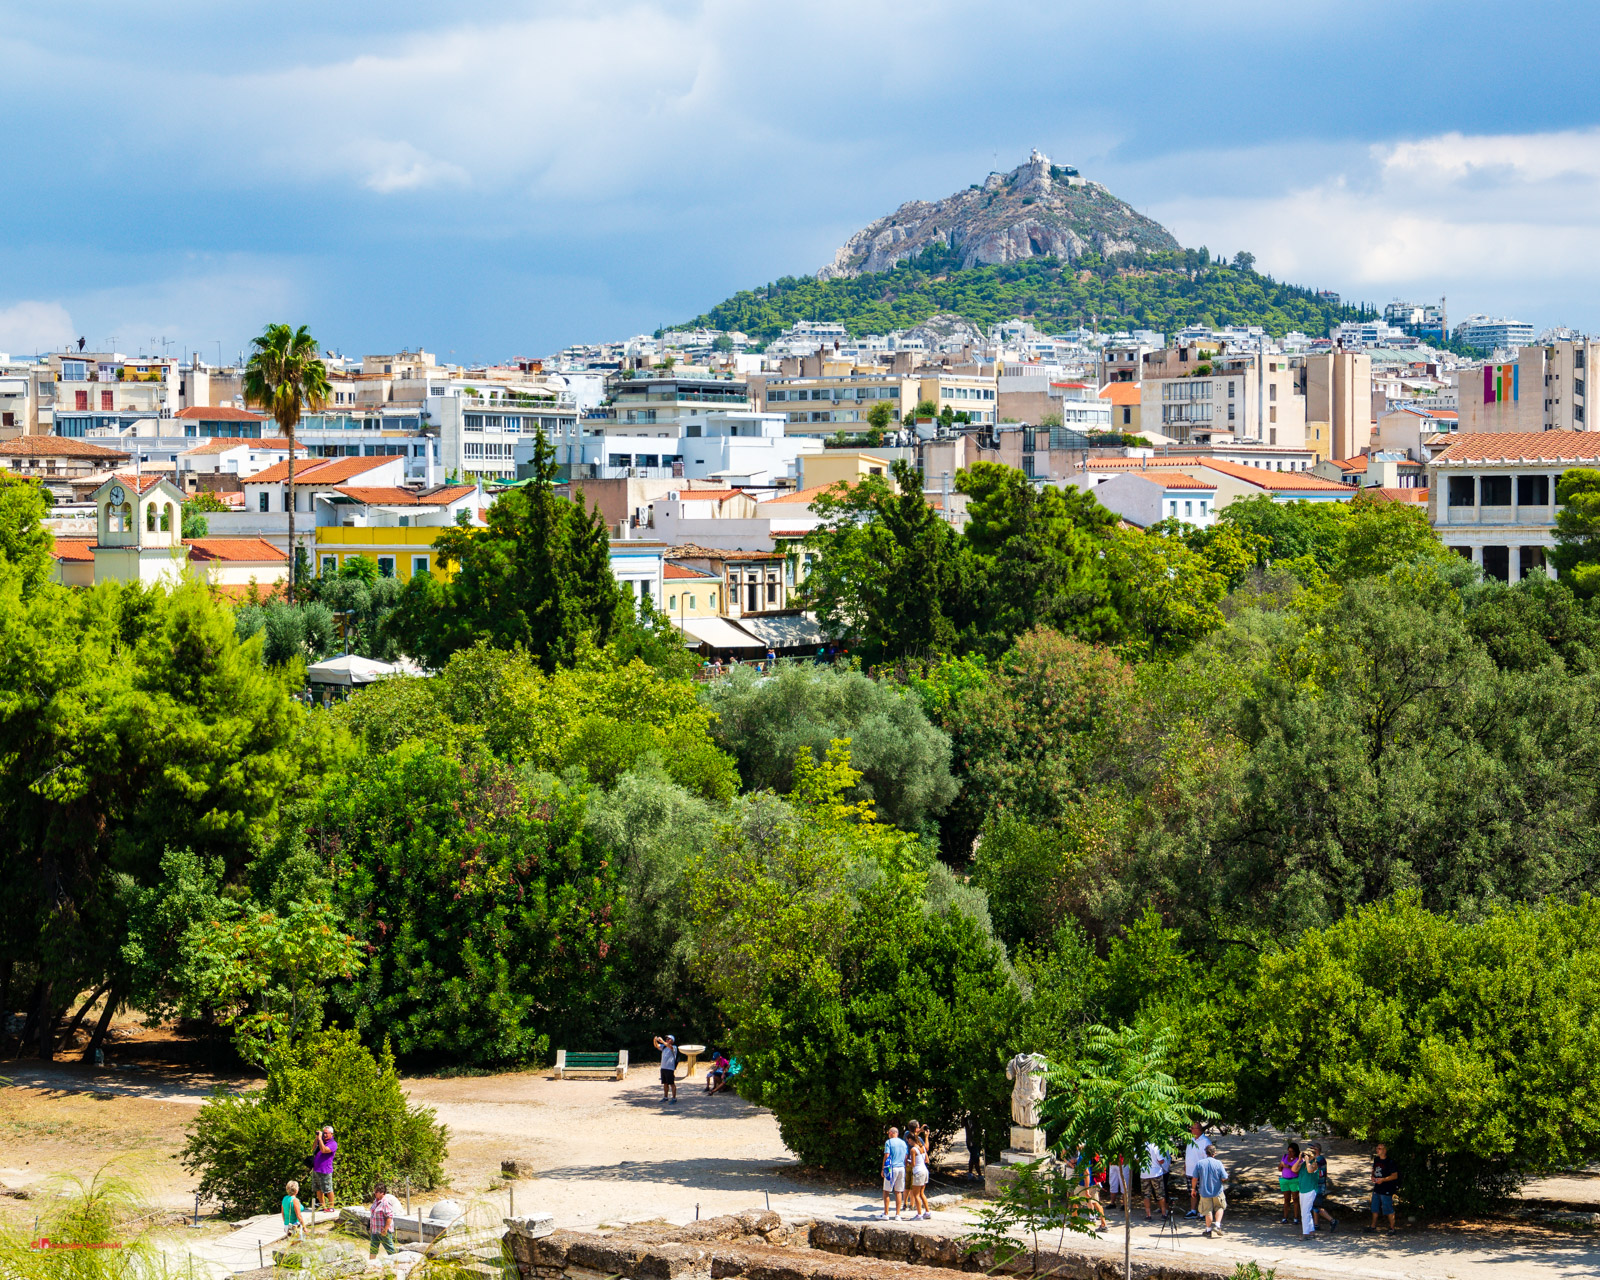 View of Likavitou Mountain from the Ancient Agora